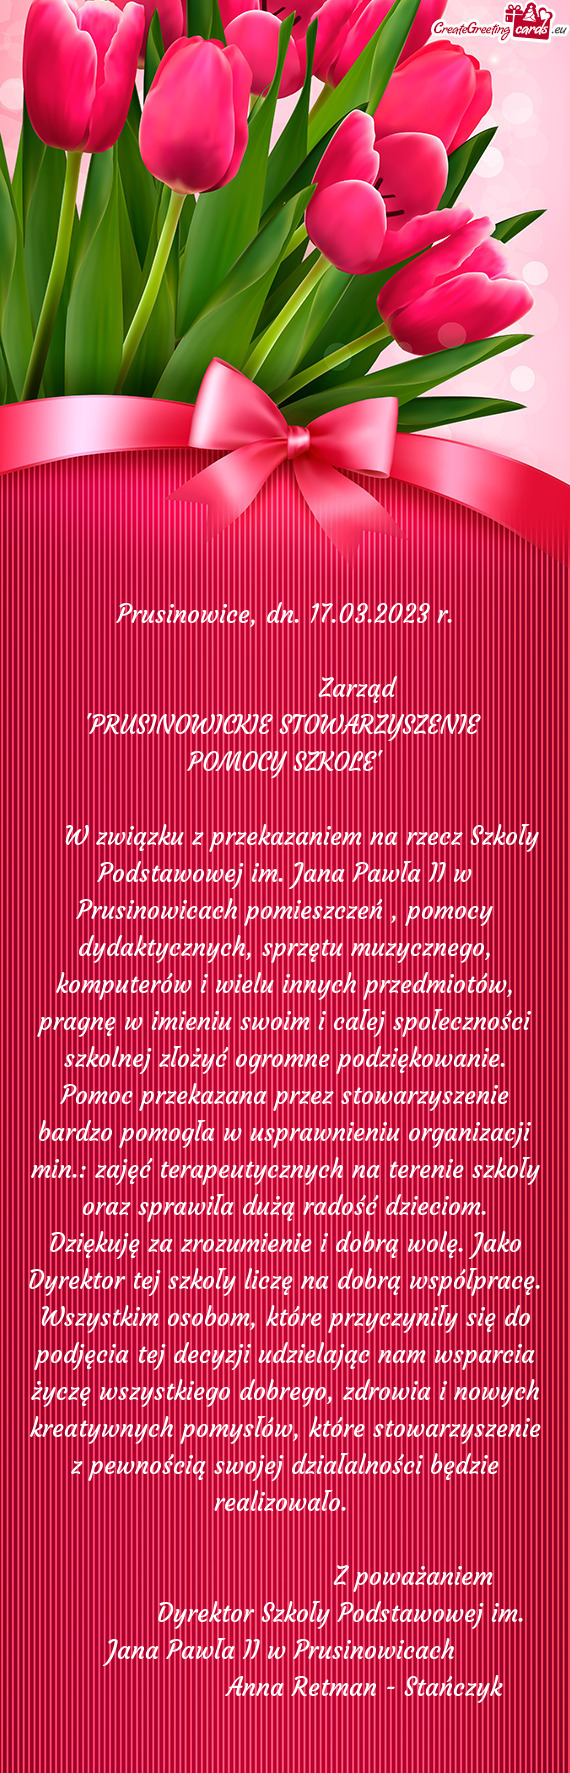 Prusinowice, dn. 17.03.2023 r